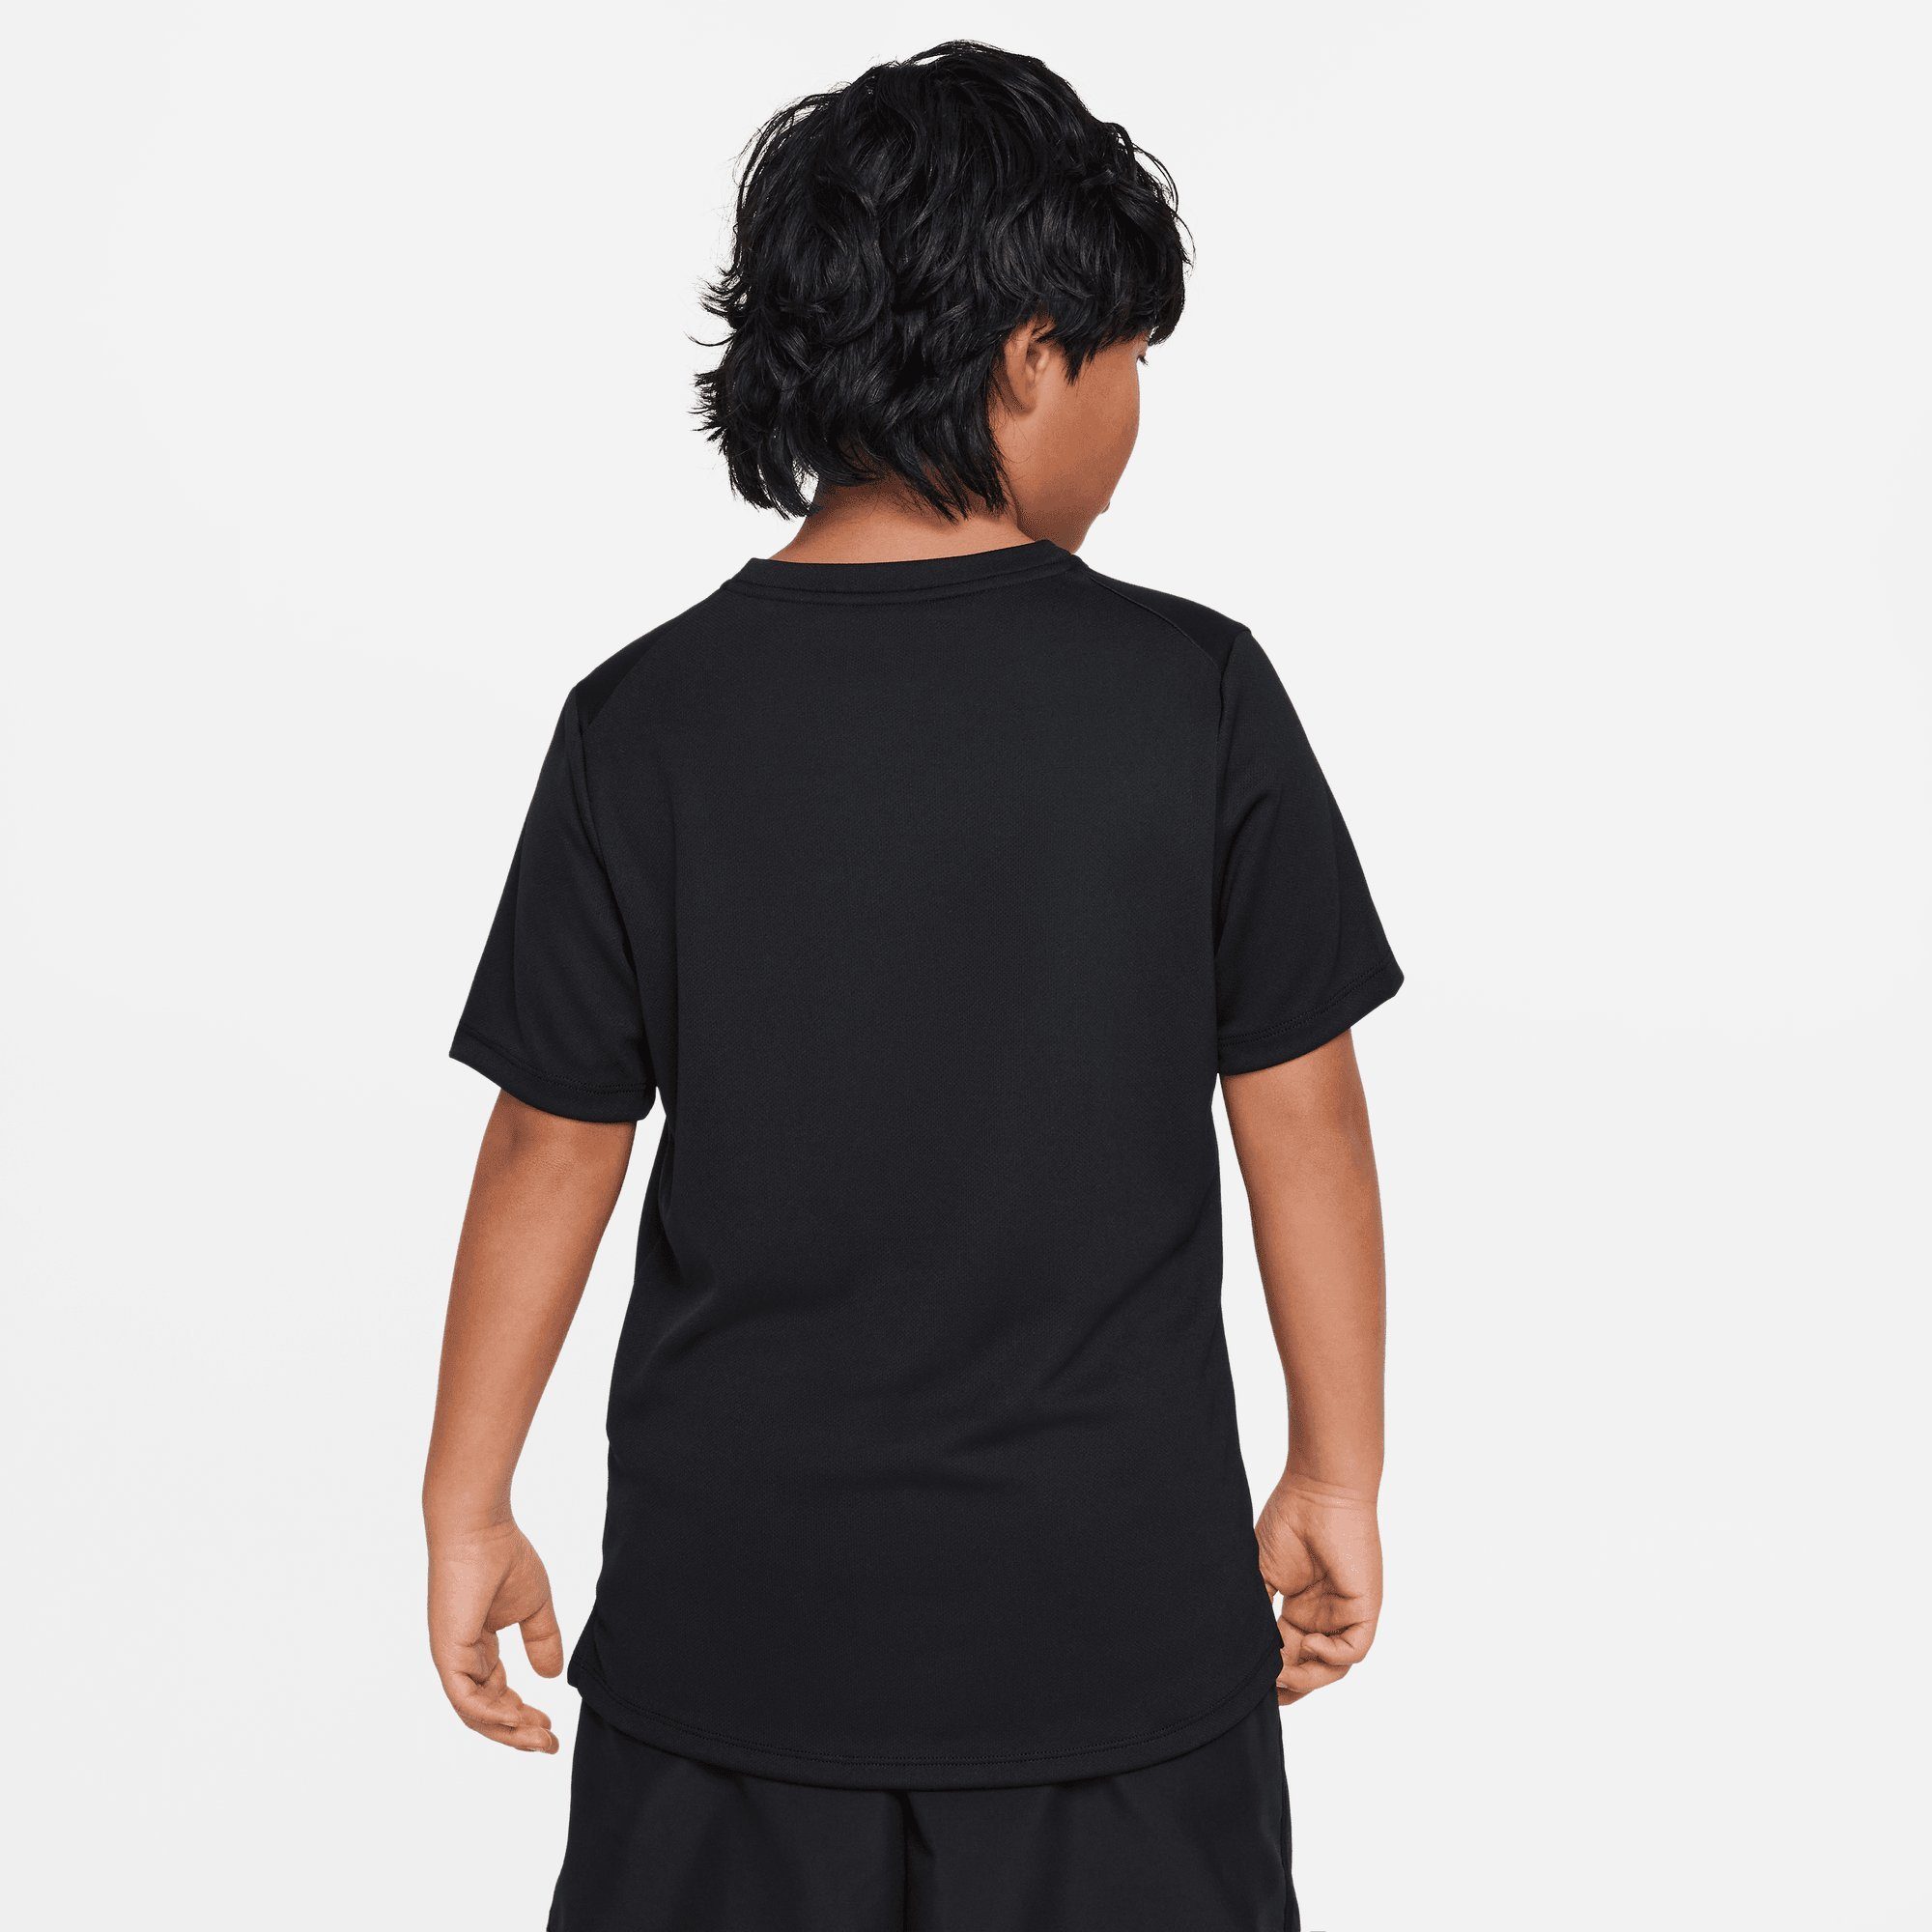 SHORT-SLEEVE BLACK/REFLECTIVE SILV KIDS' TOP TRAINING DRI-FIT Trainingsshirt (BOYS) MILER BIG Nike